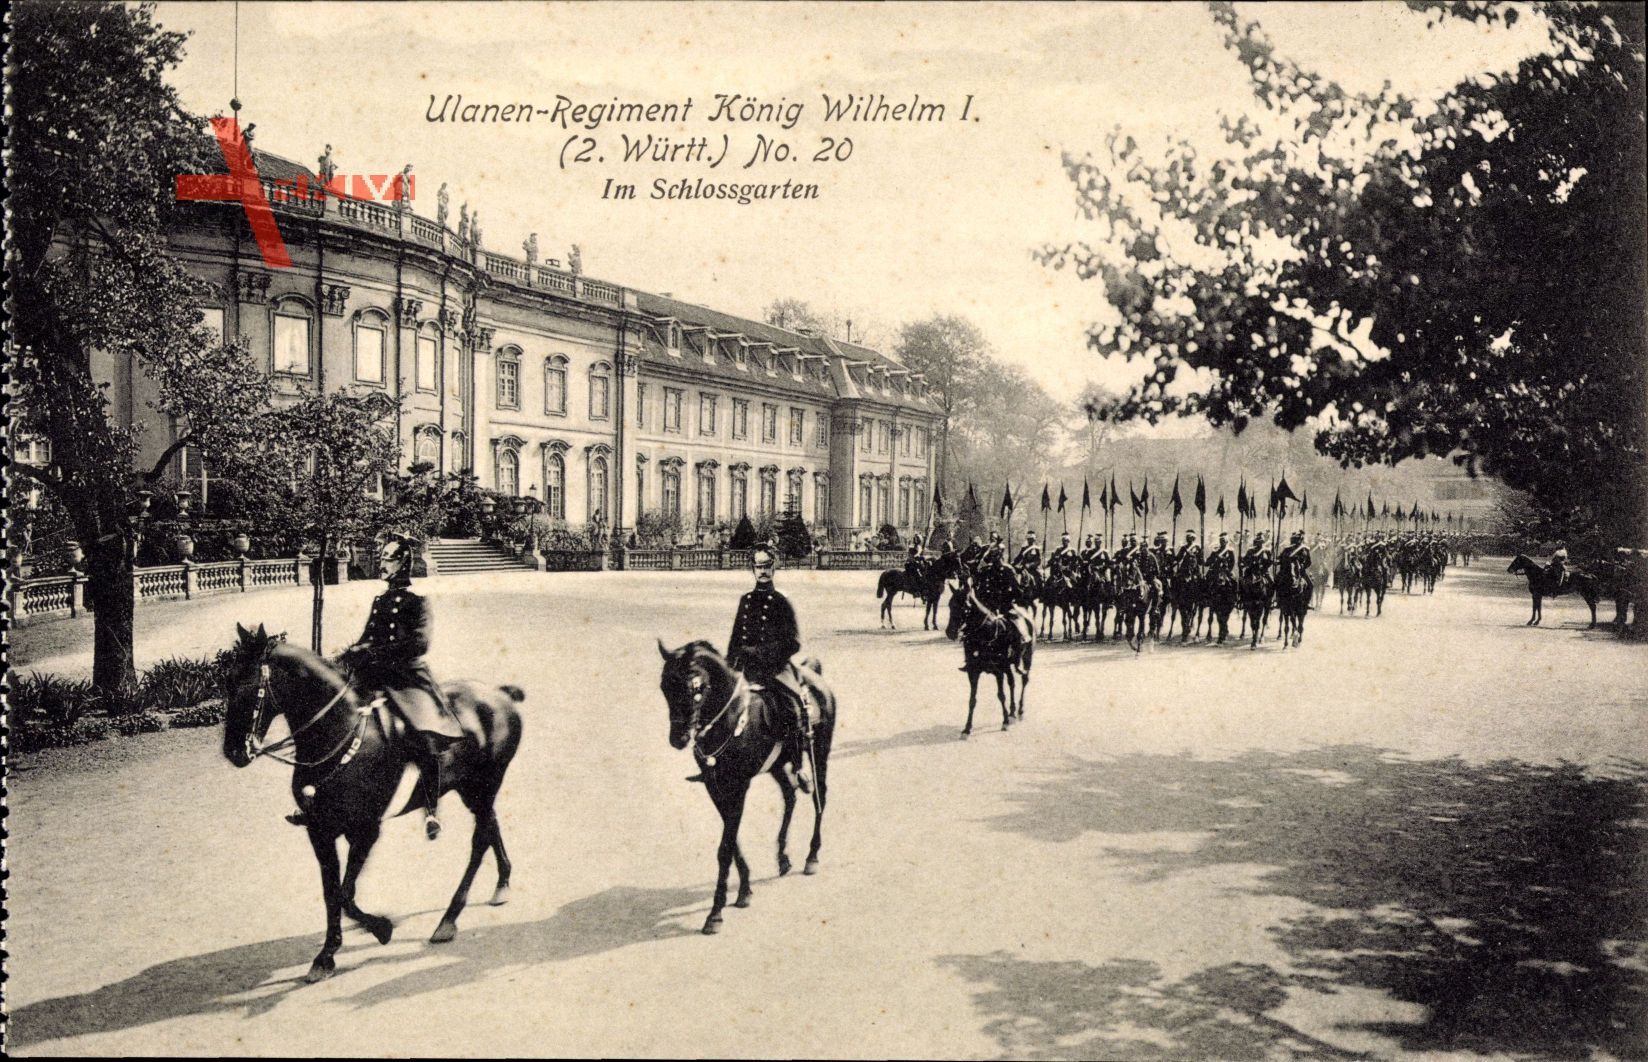 Regiment Ludwigsburg, Ulanen Regiment König Wilhelm I. 2 Württ No 20, Schloss